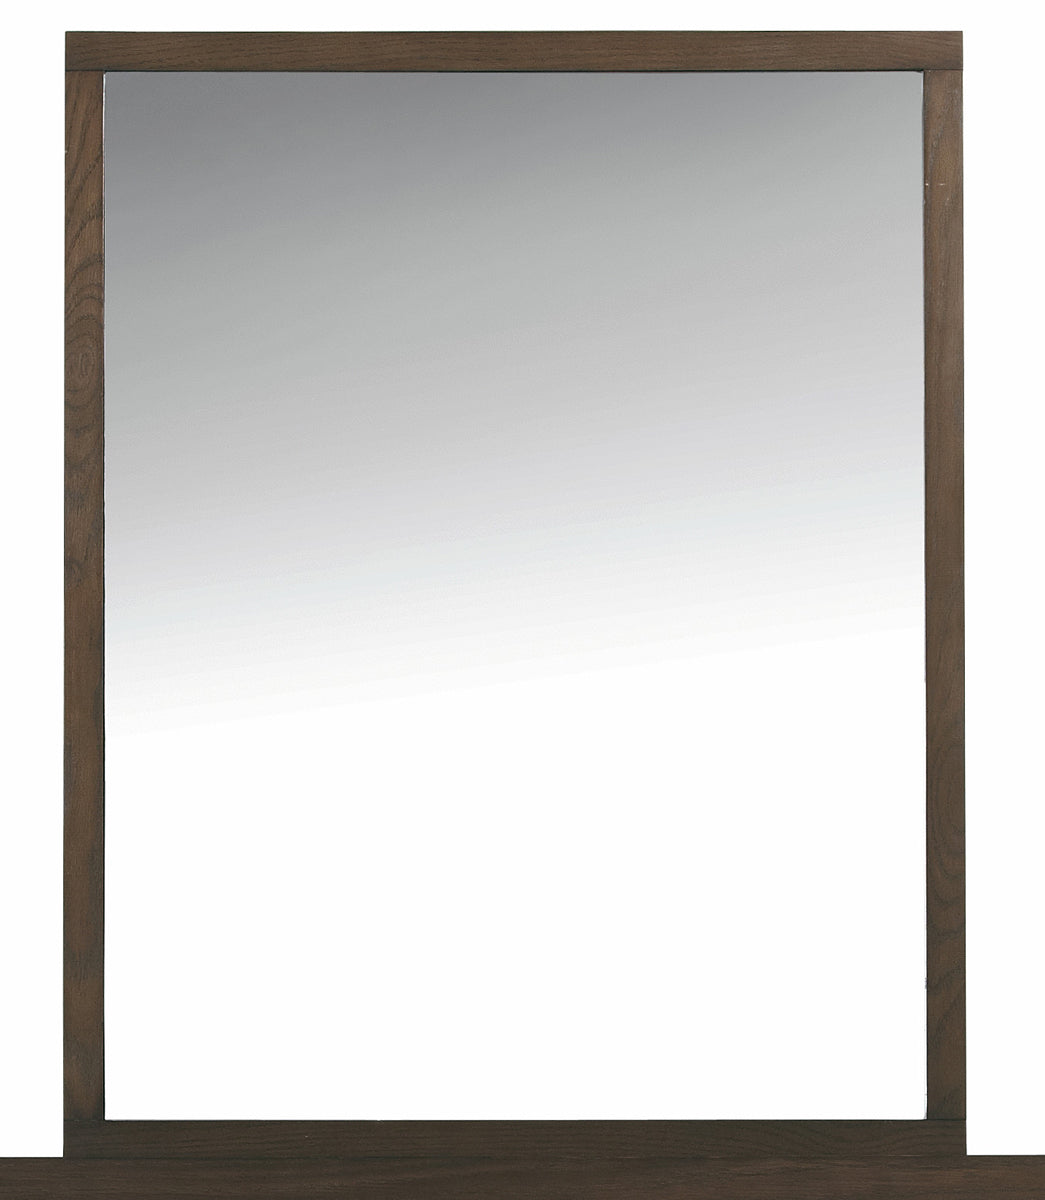 Palliser (Casana) Furniture Montreal (Hudson) Portrait Mirror in Deep Licorice 525-401 image